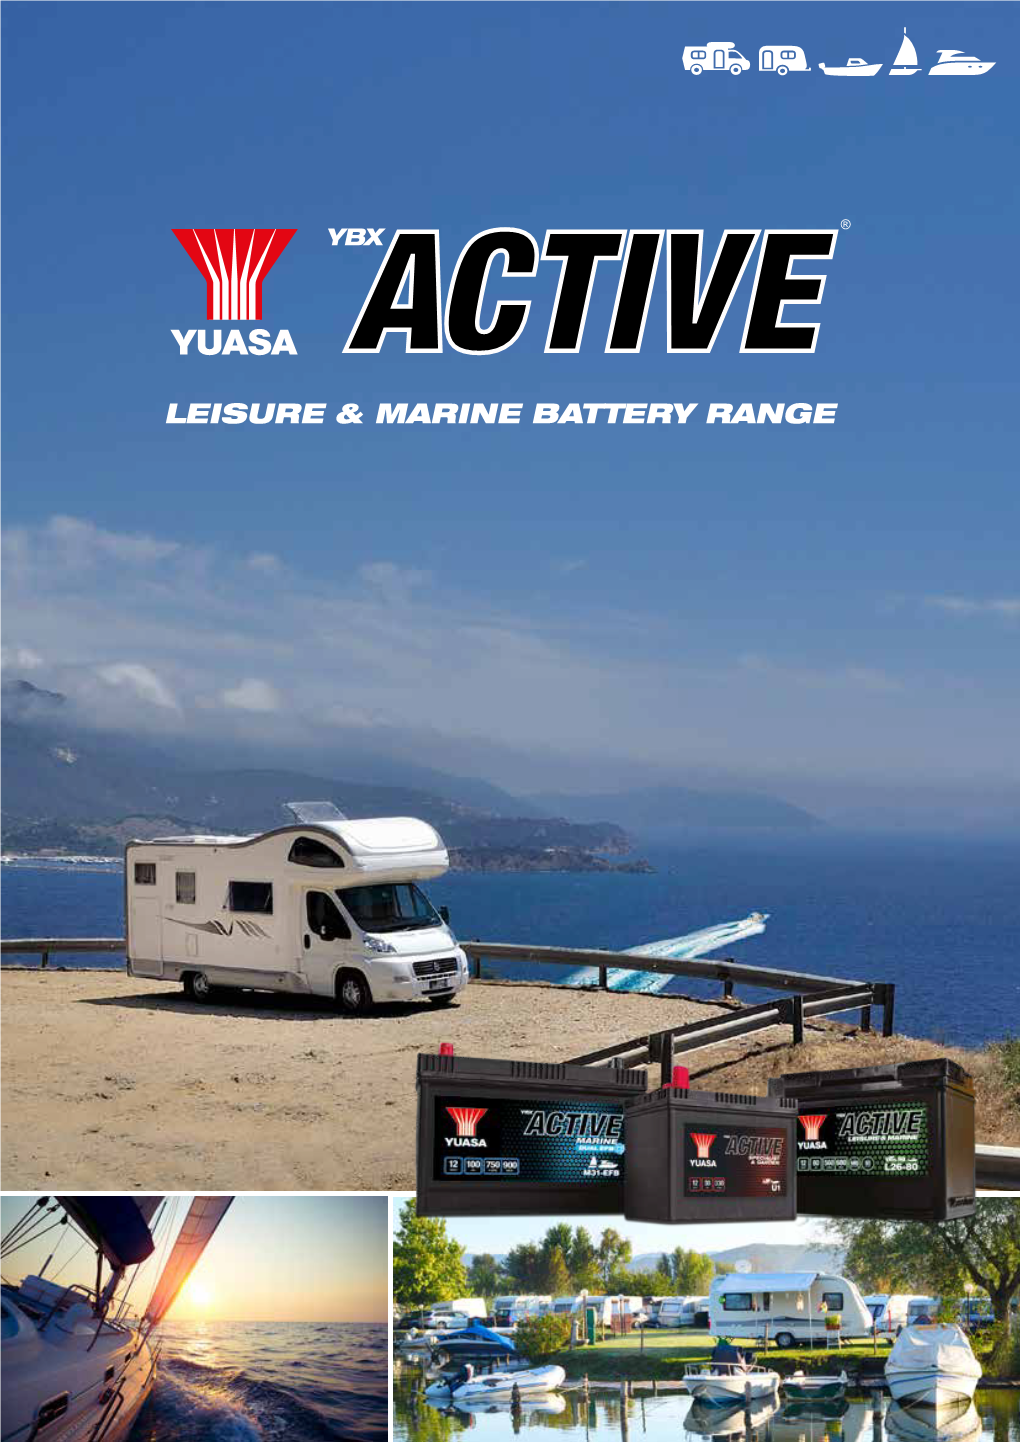 Leisure & Marine Battery Range